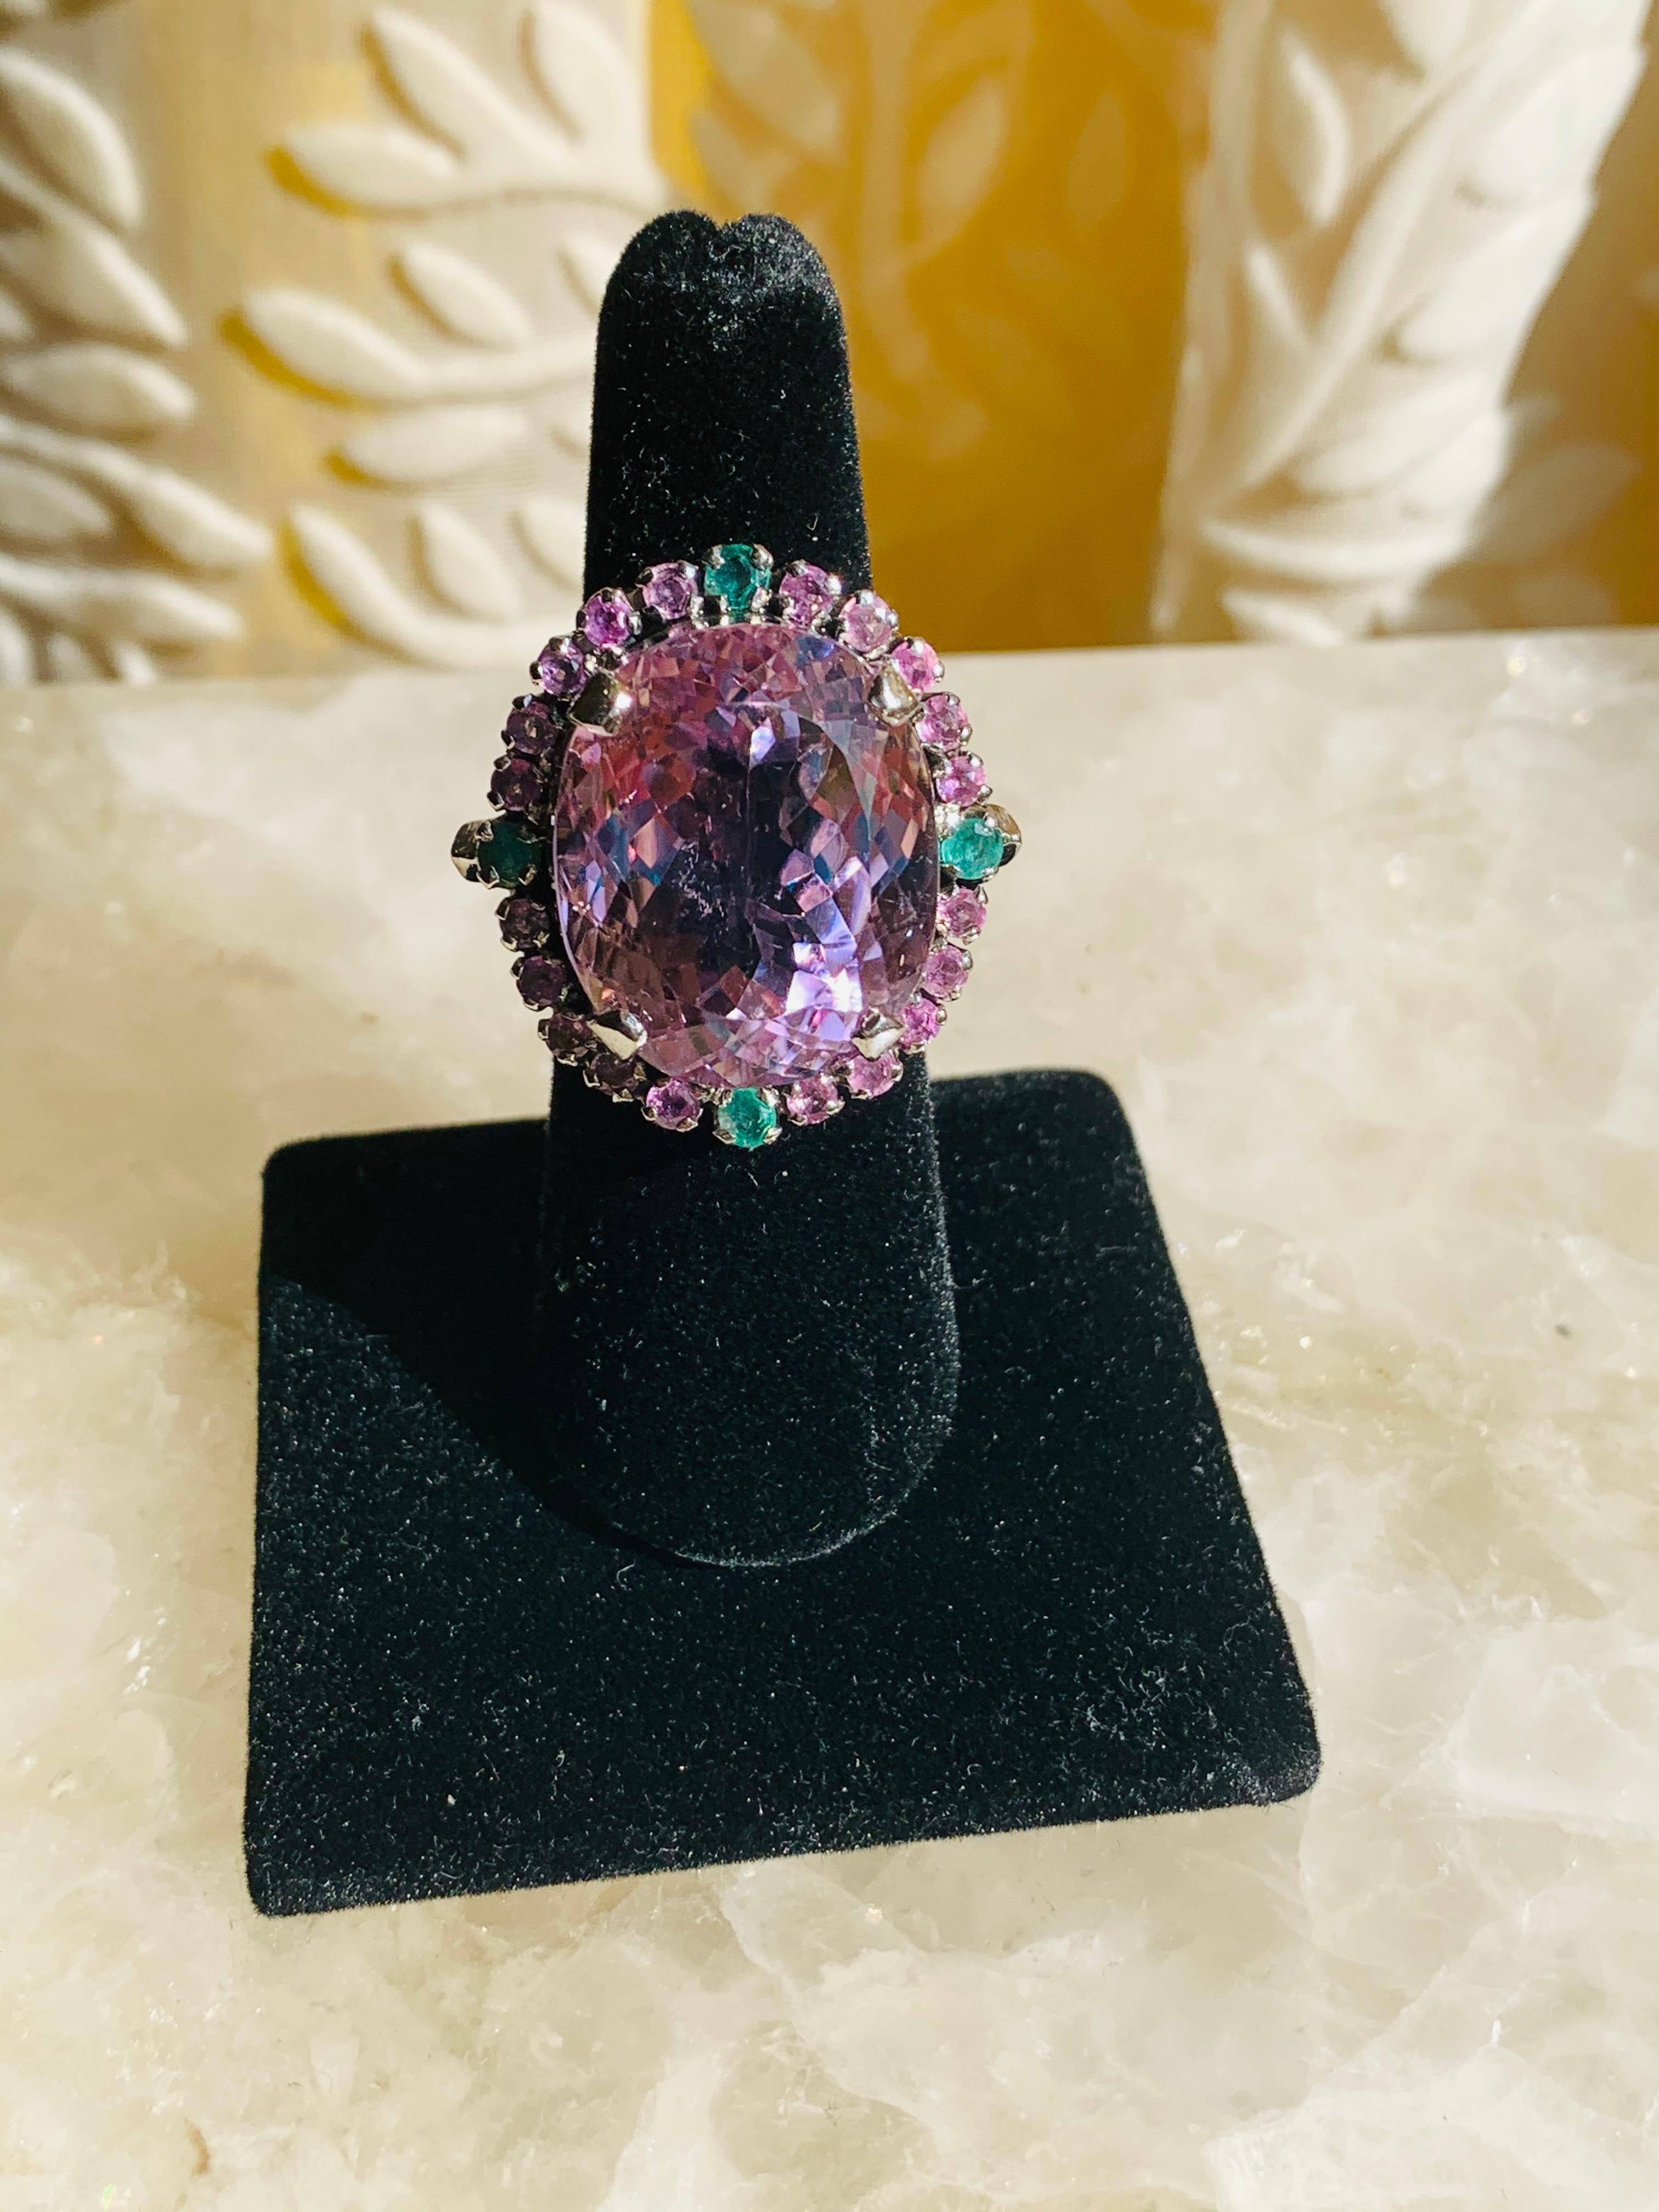 Sabrina Balsky Jewelry
Handmade One of a Kind Kunzite and Emerald Cocktail Ring
1-2/16